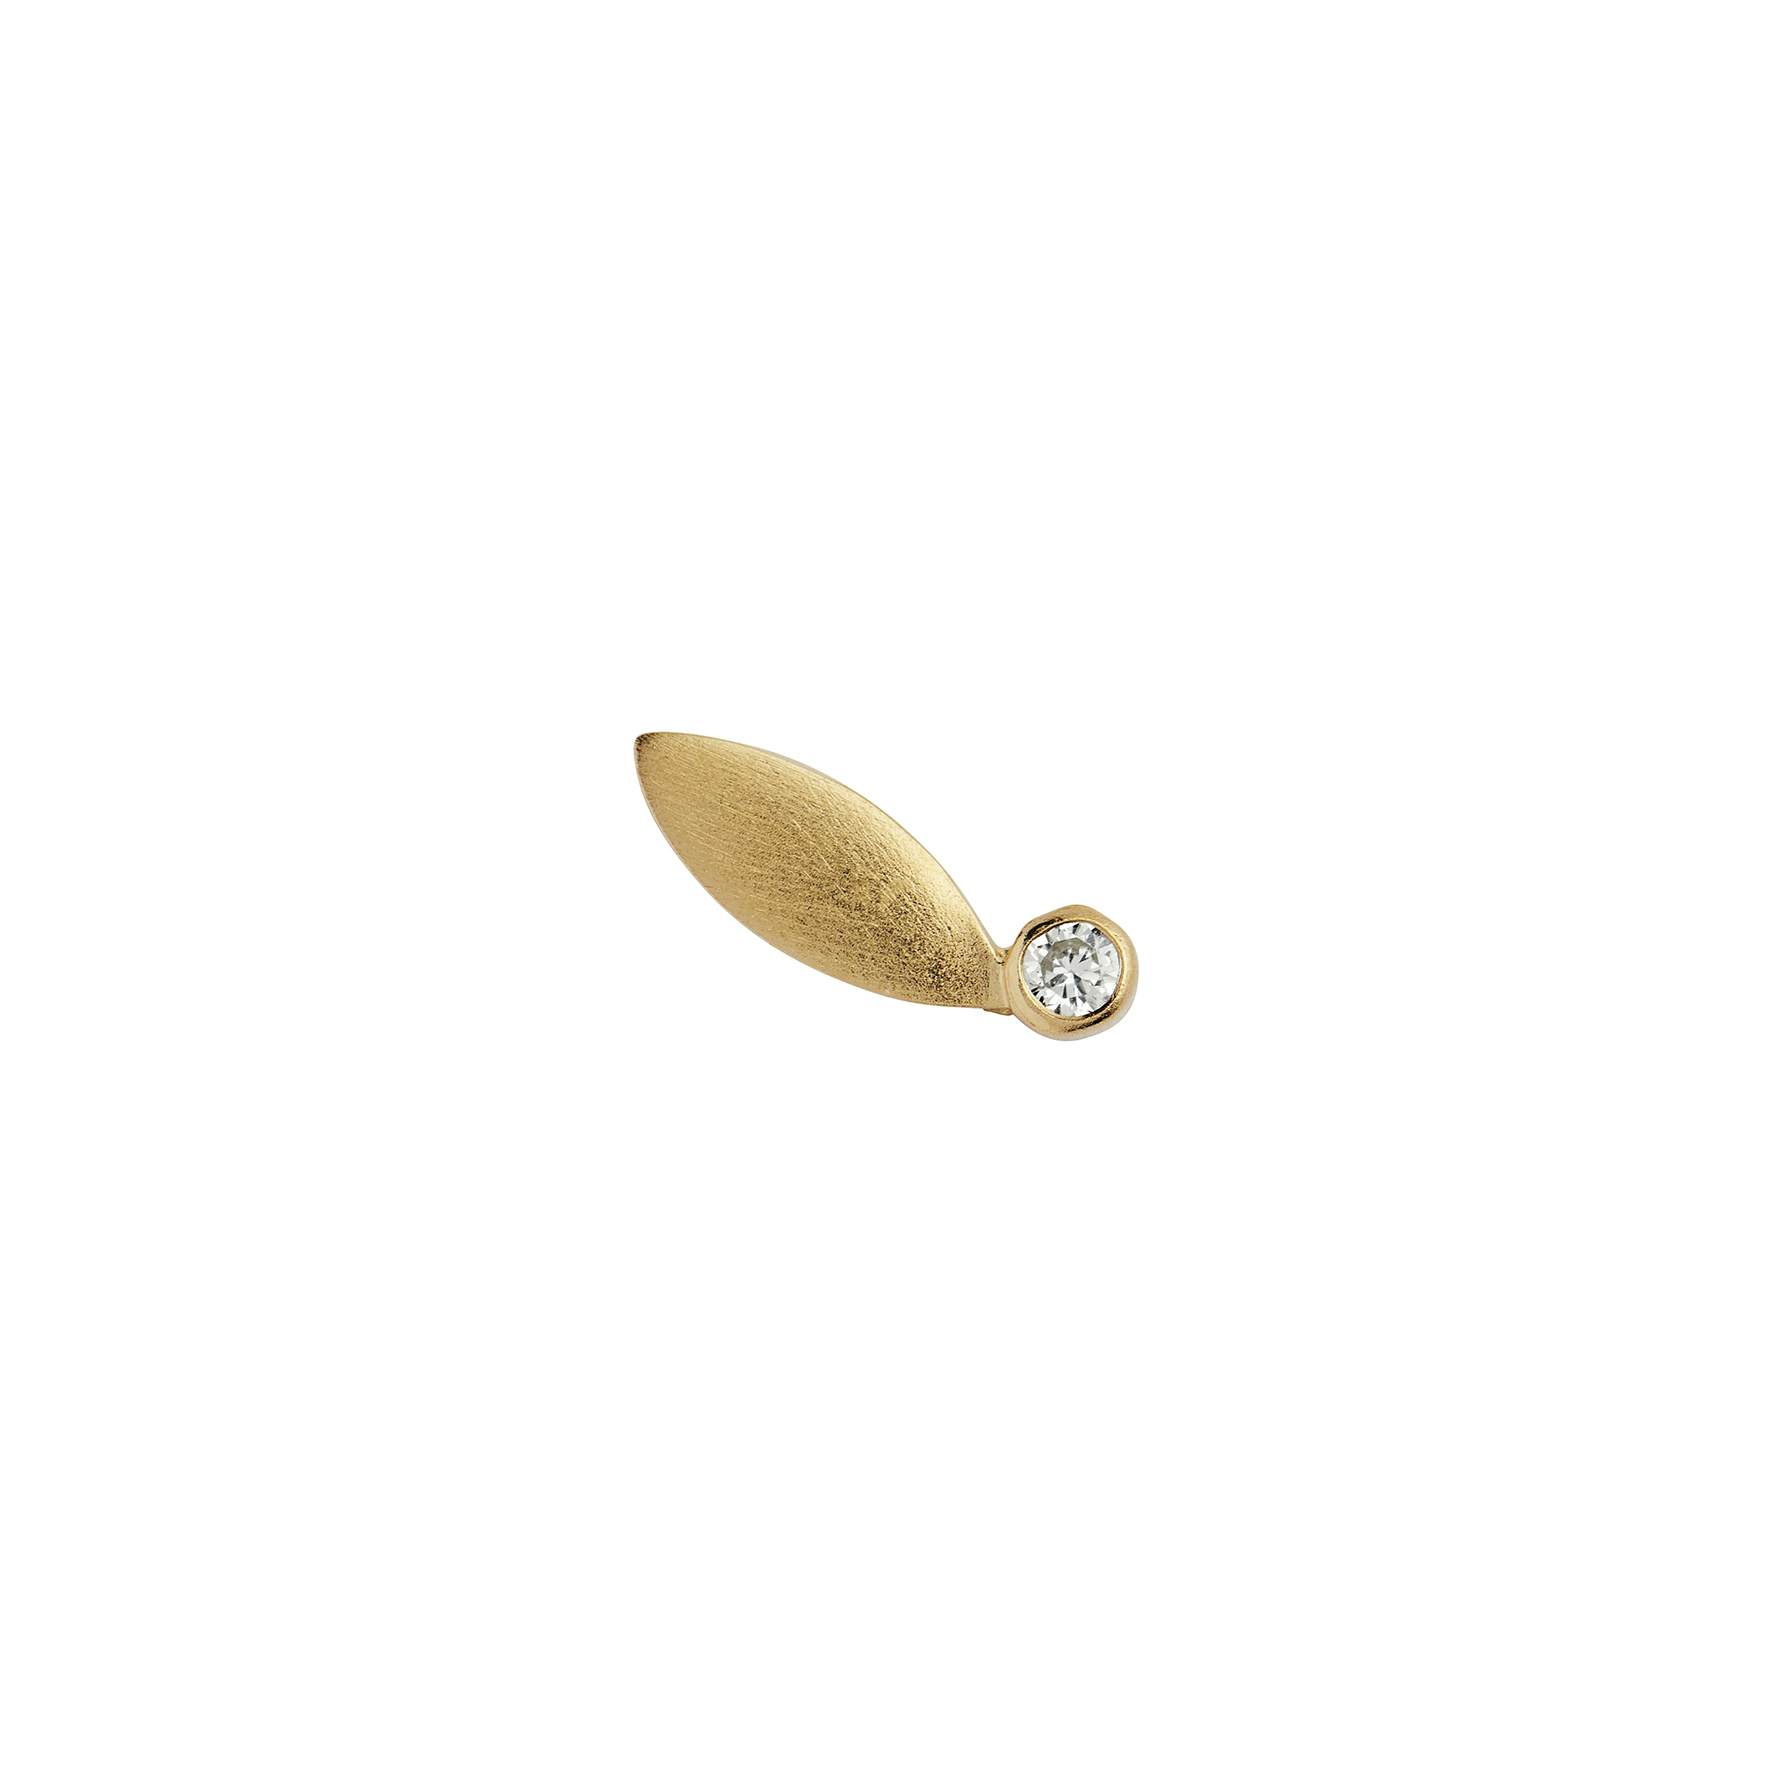 Big Dot Leaf Earstick Light Peridot fra STINE A Jewelry i Forgyldt-Sølv Sterling 925|Mat